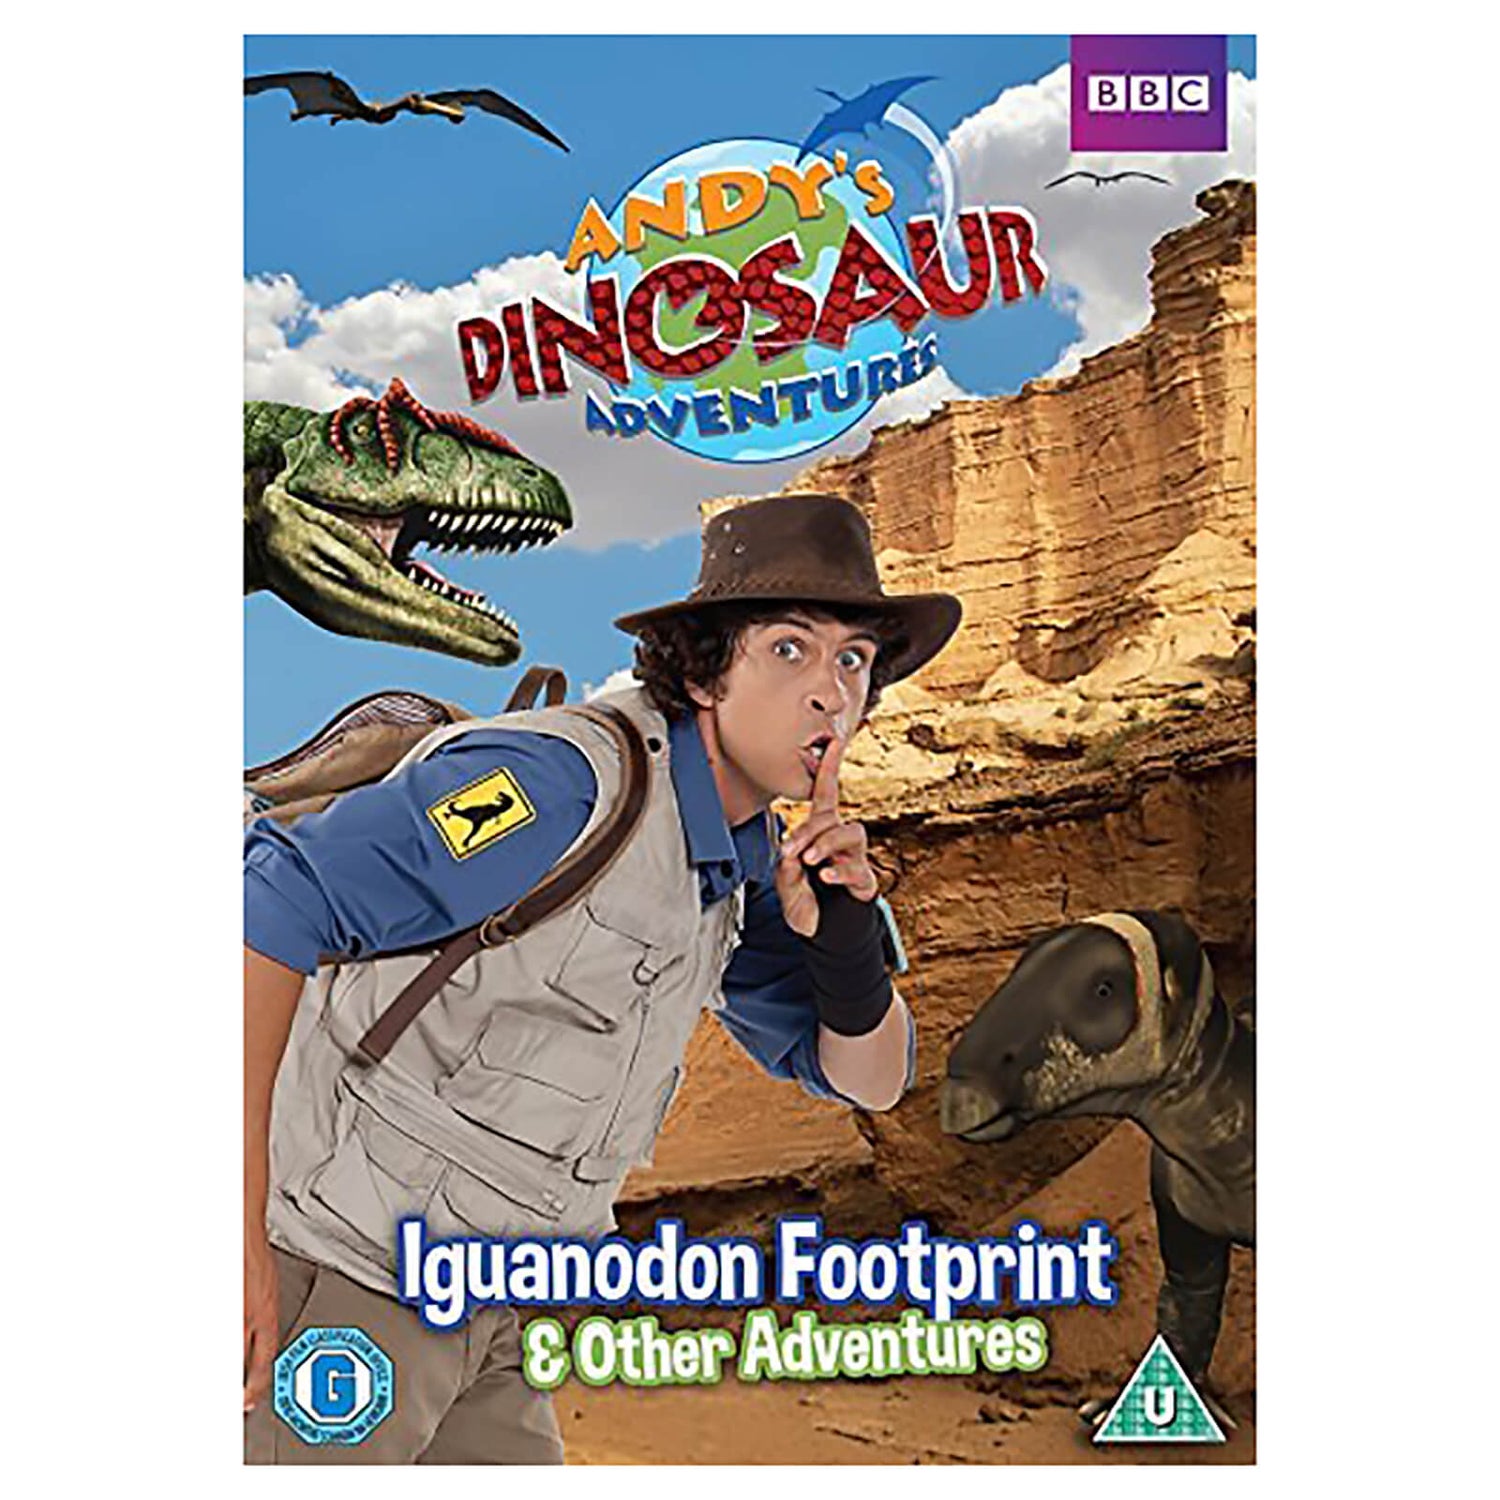 Andy's Dinosaur Adventures: Iguanadon Footprint